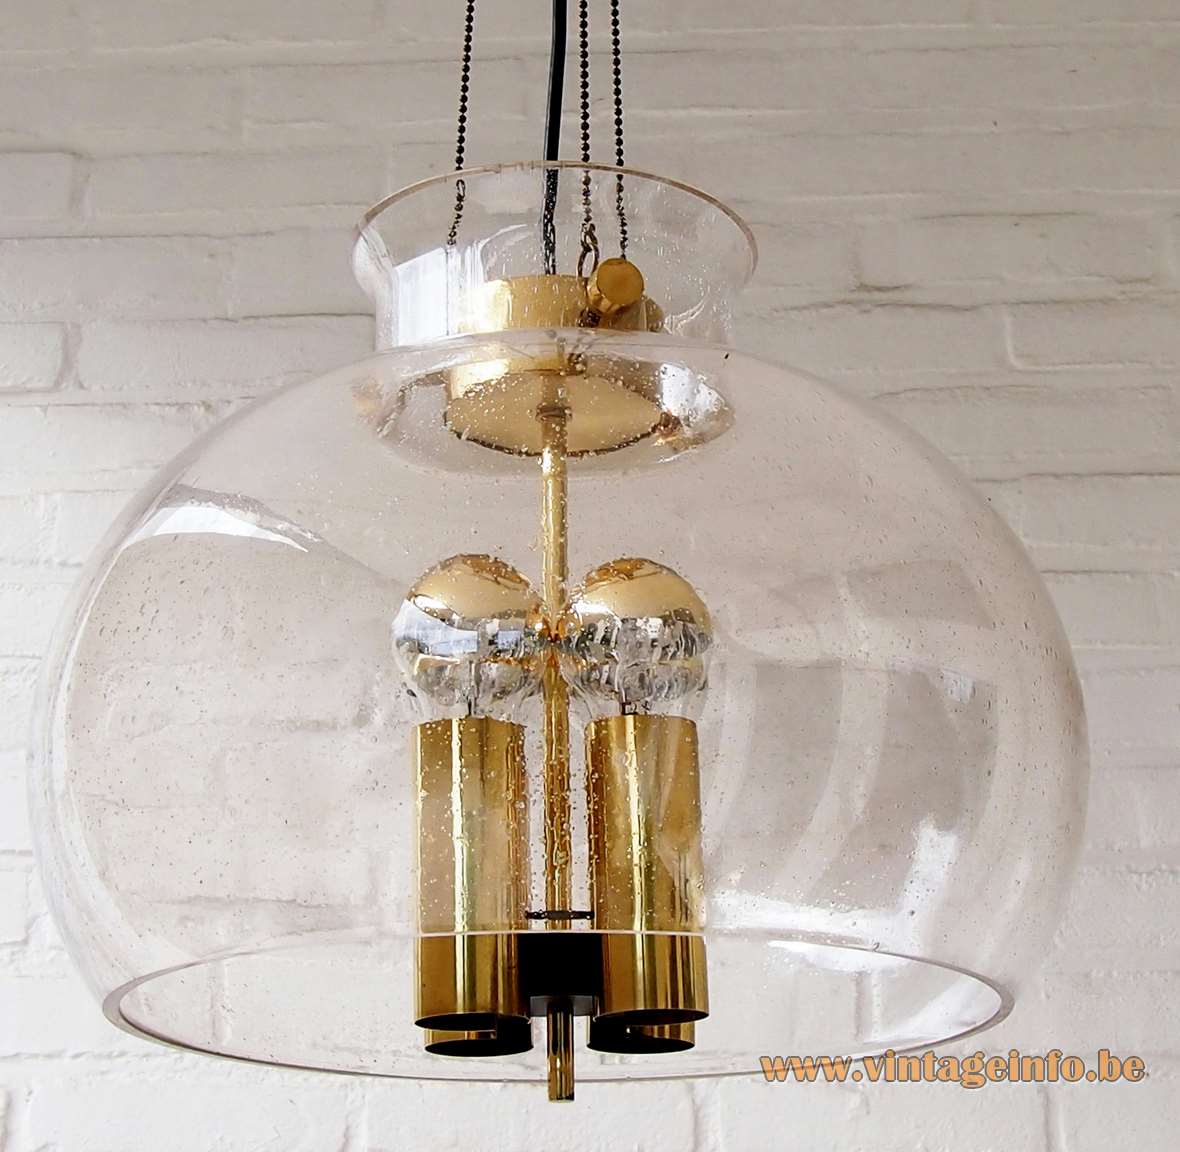 Herbert Proft Glashütte Limburg chandelier clear glass globe 4 brass tubes rods & chains 1970s Germany 